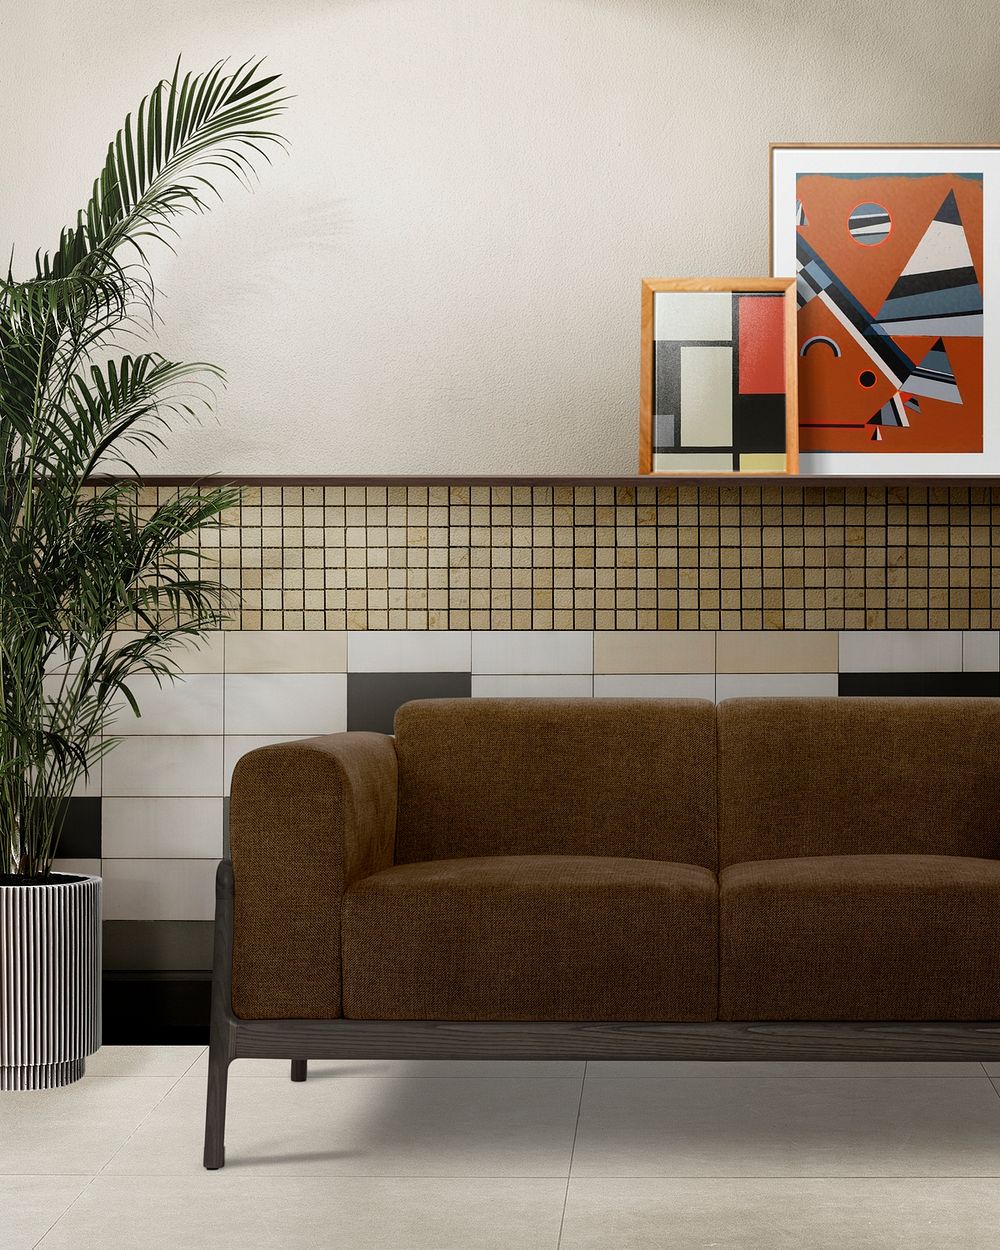 Interior and frame mockup psd with modern living room design